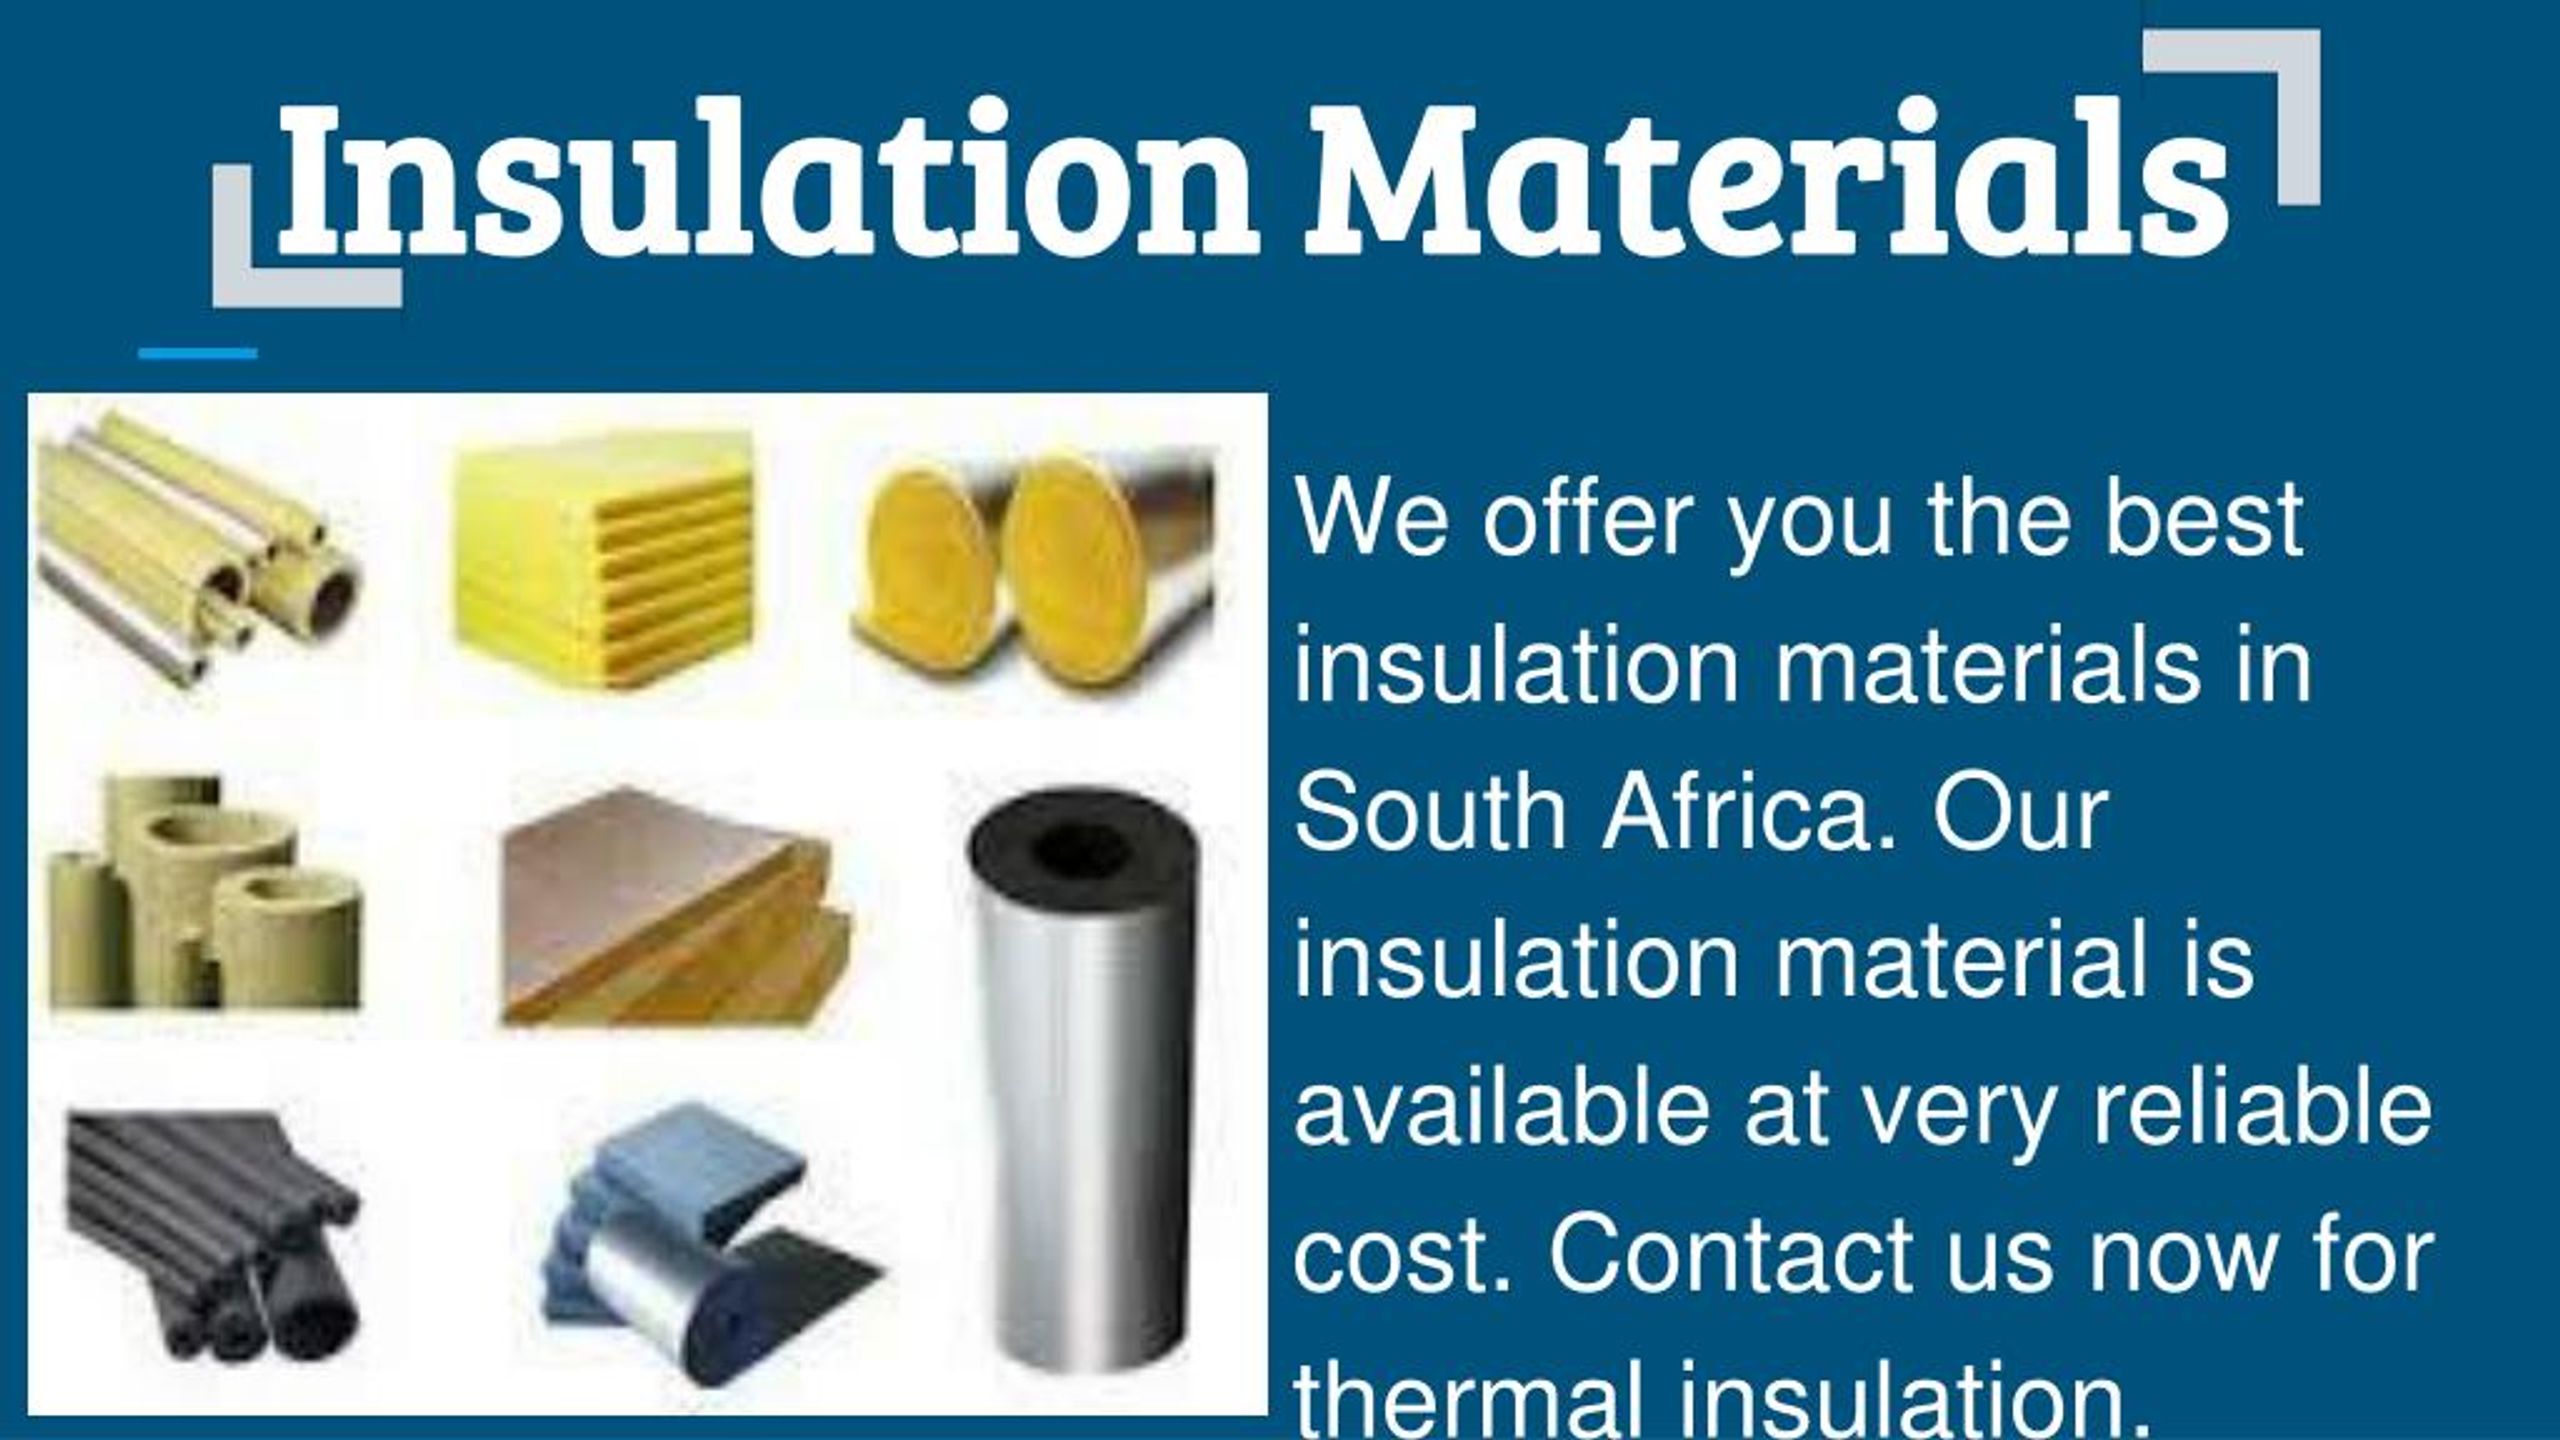 presentation on insulating materials